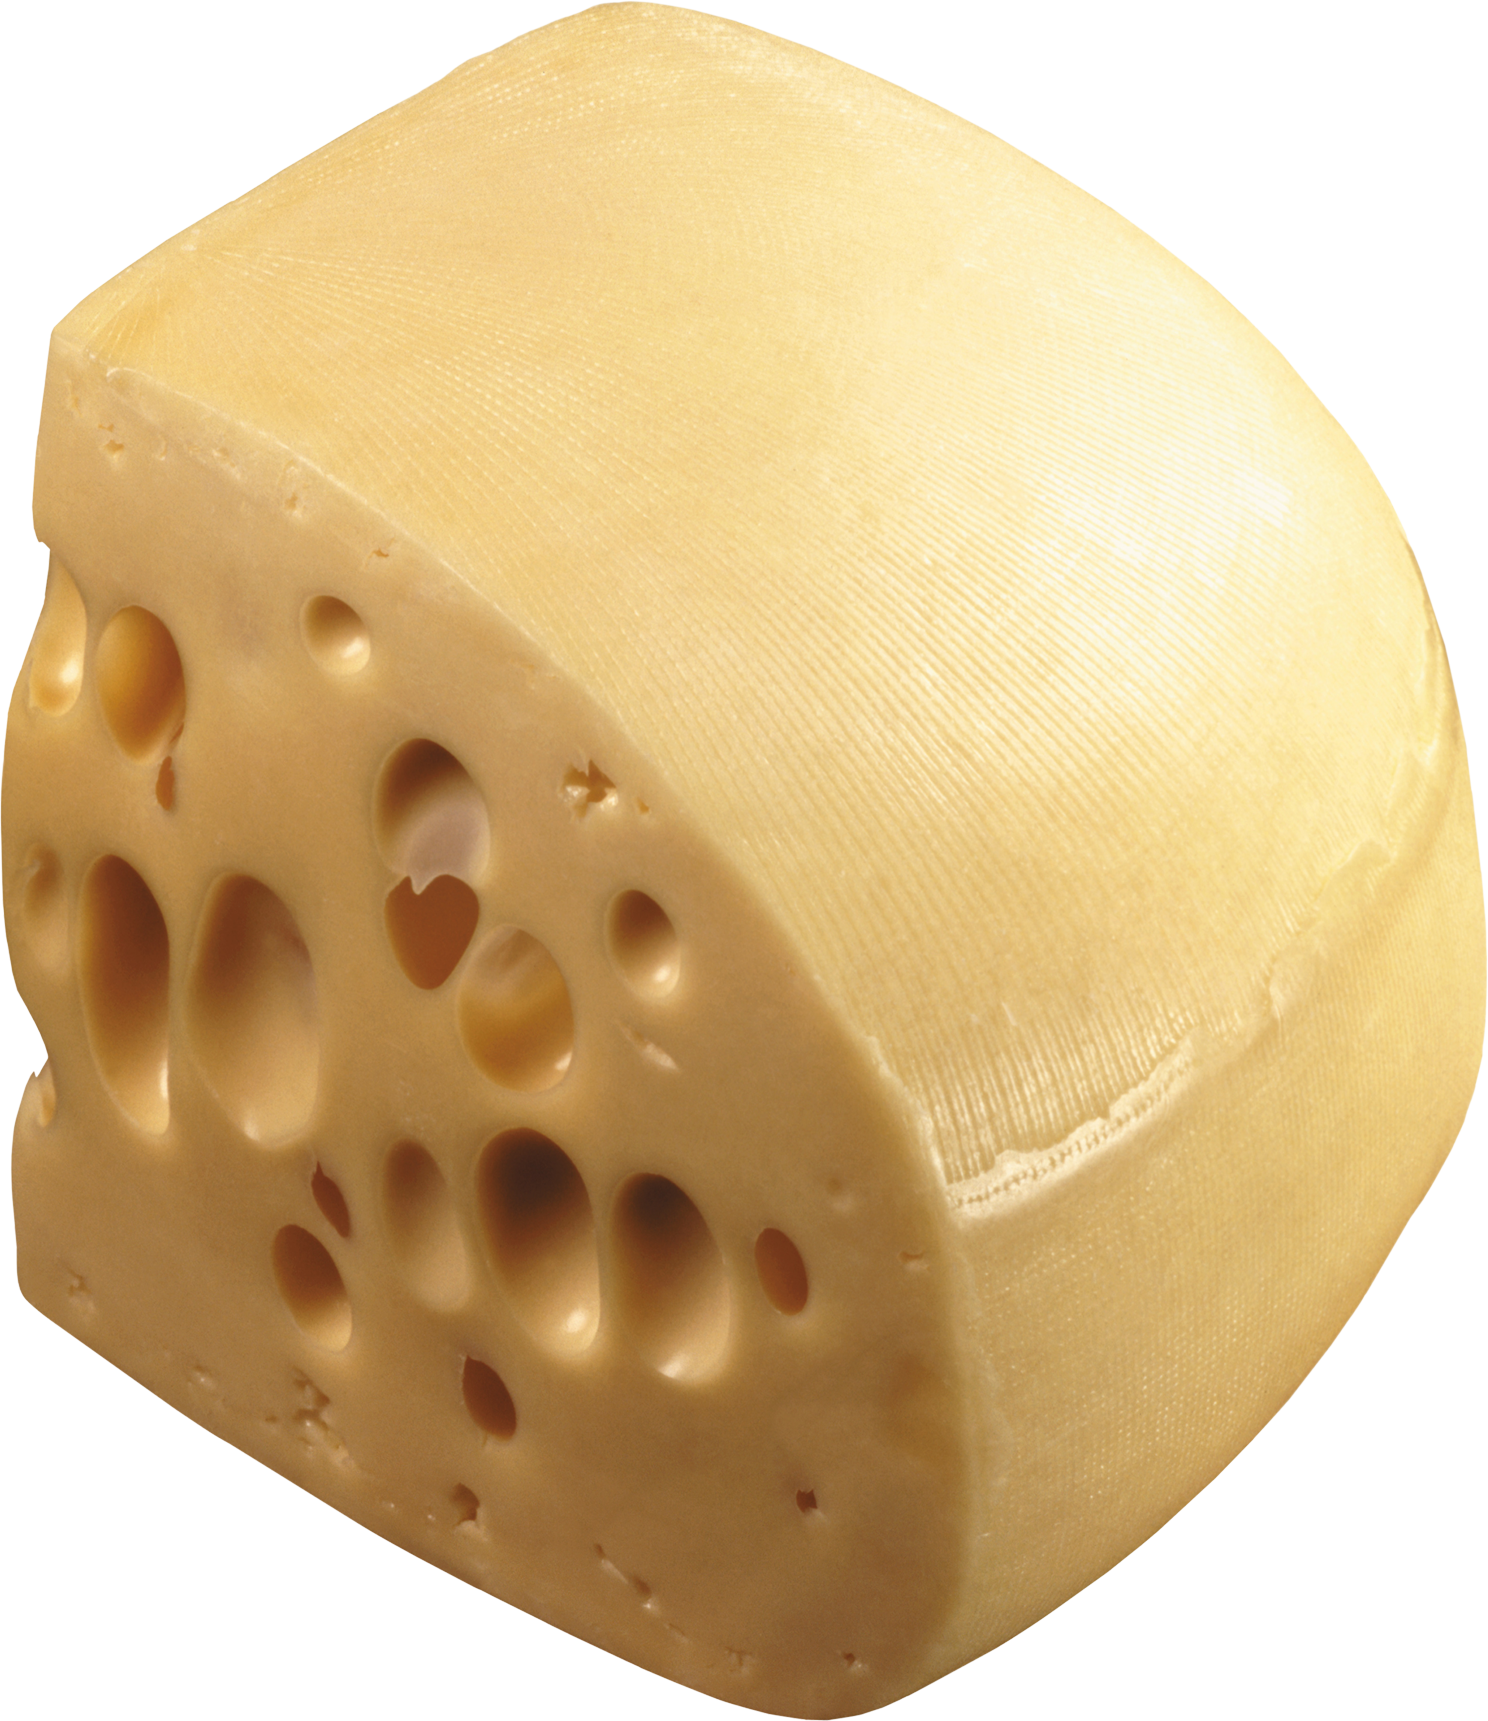 Картинка сыра. Головка сыра. Сыр круглый. Круглая головка сыра. Головка сыра с дырочками.